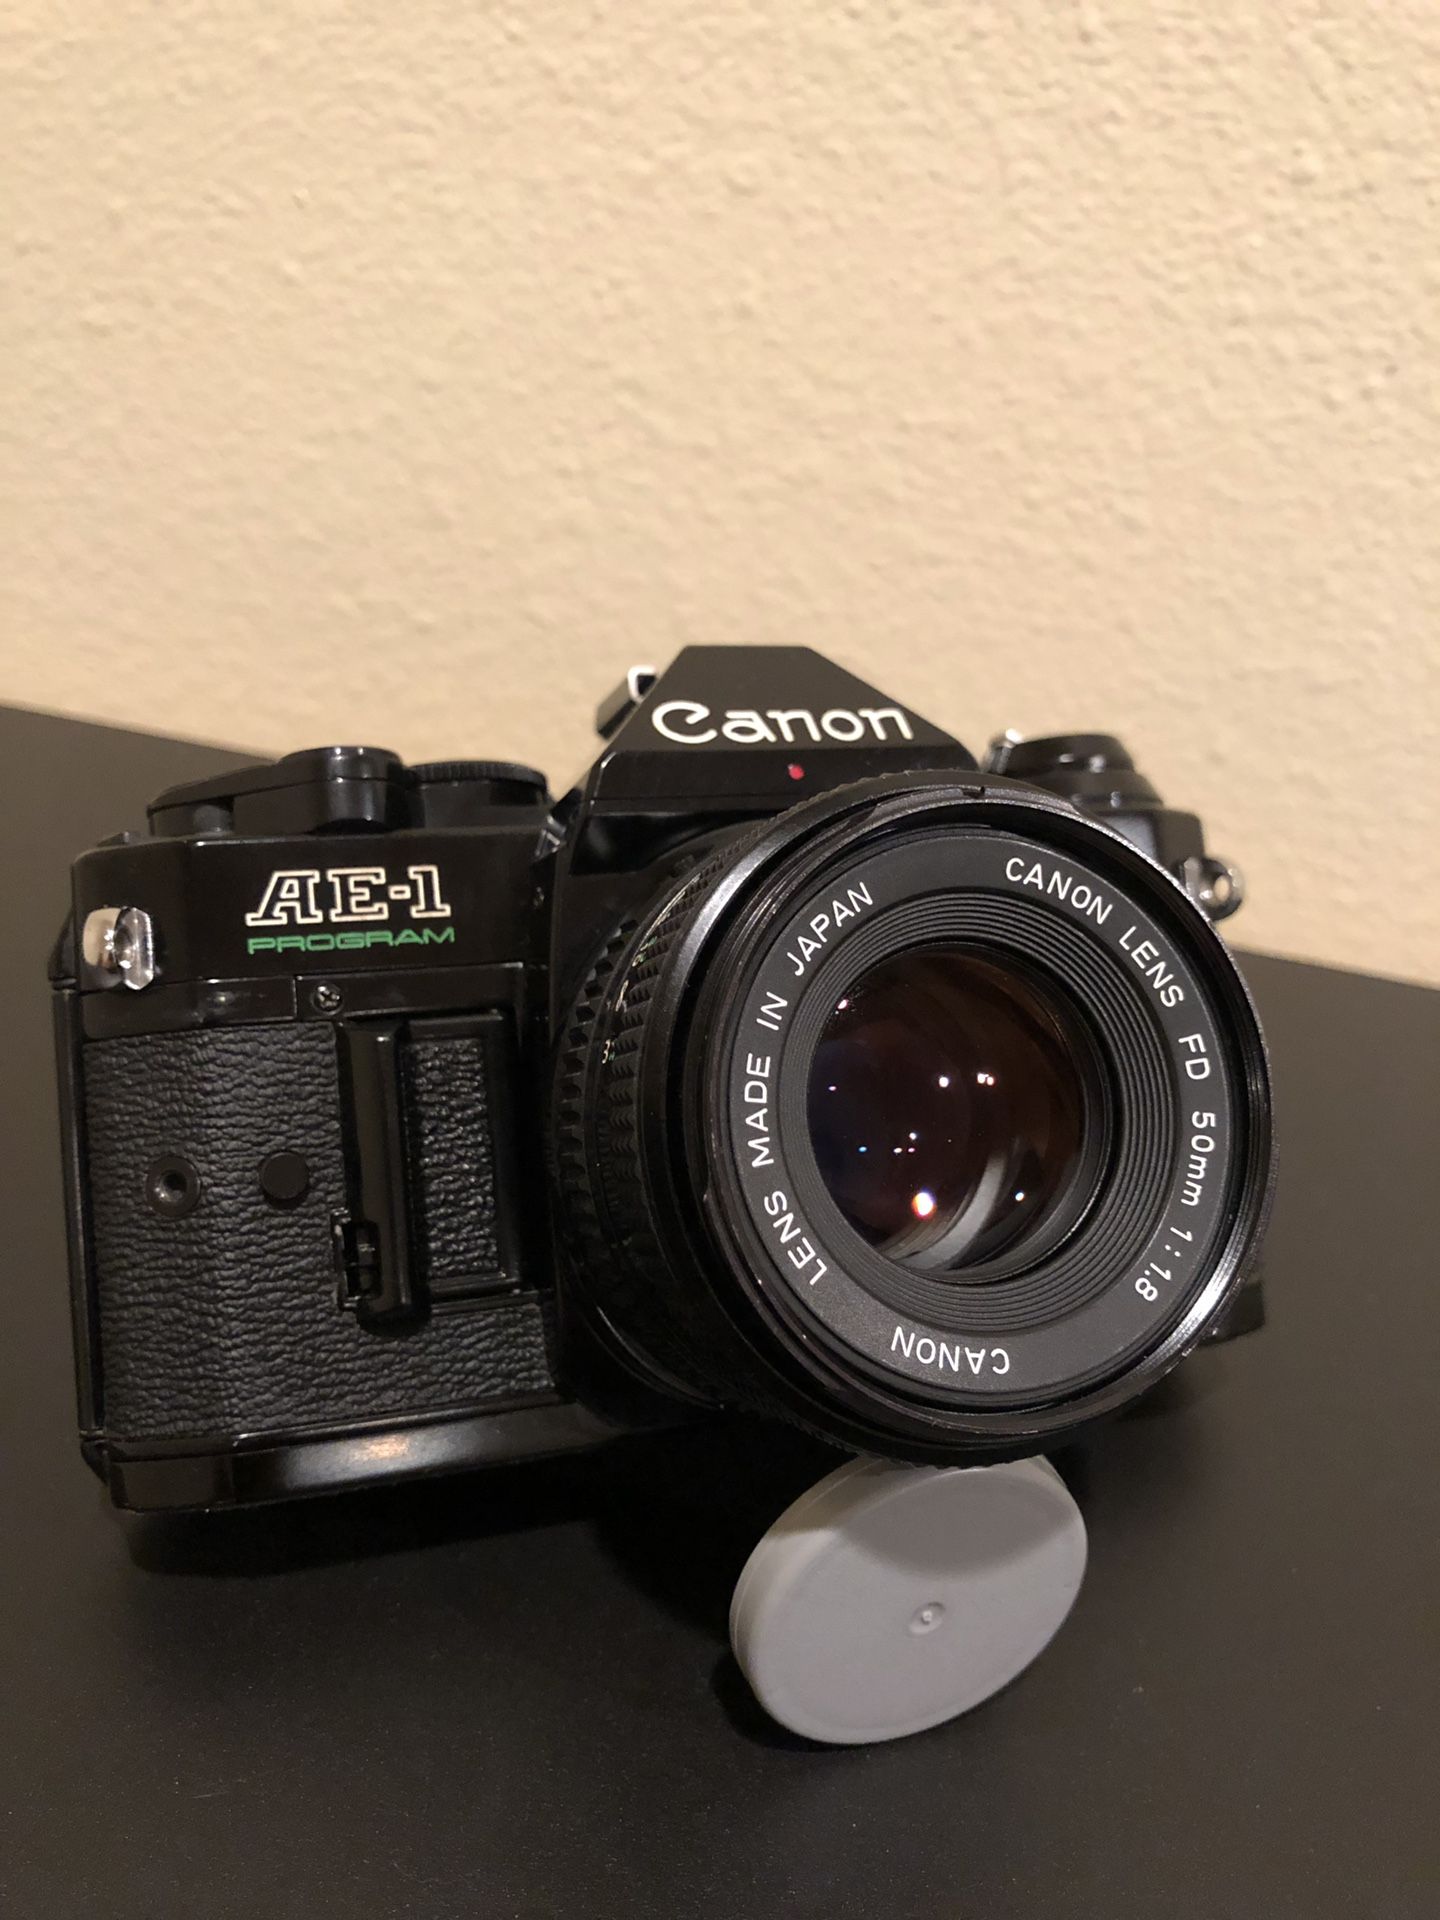 Canon AE-1 Program Black 35mm SLR Vintage Analog Film Camera